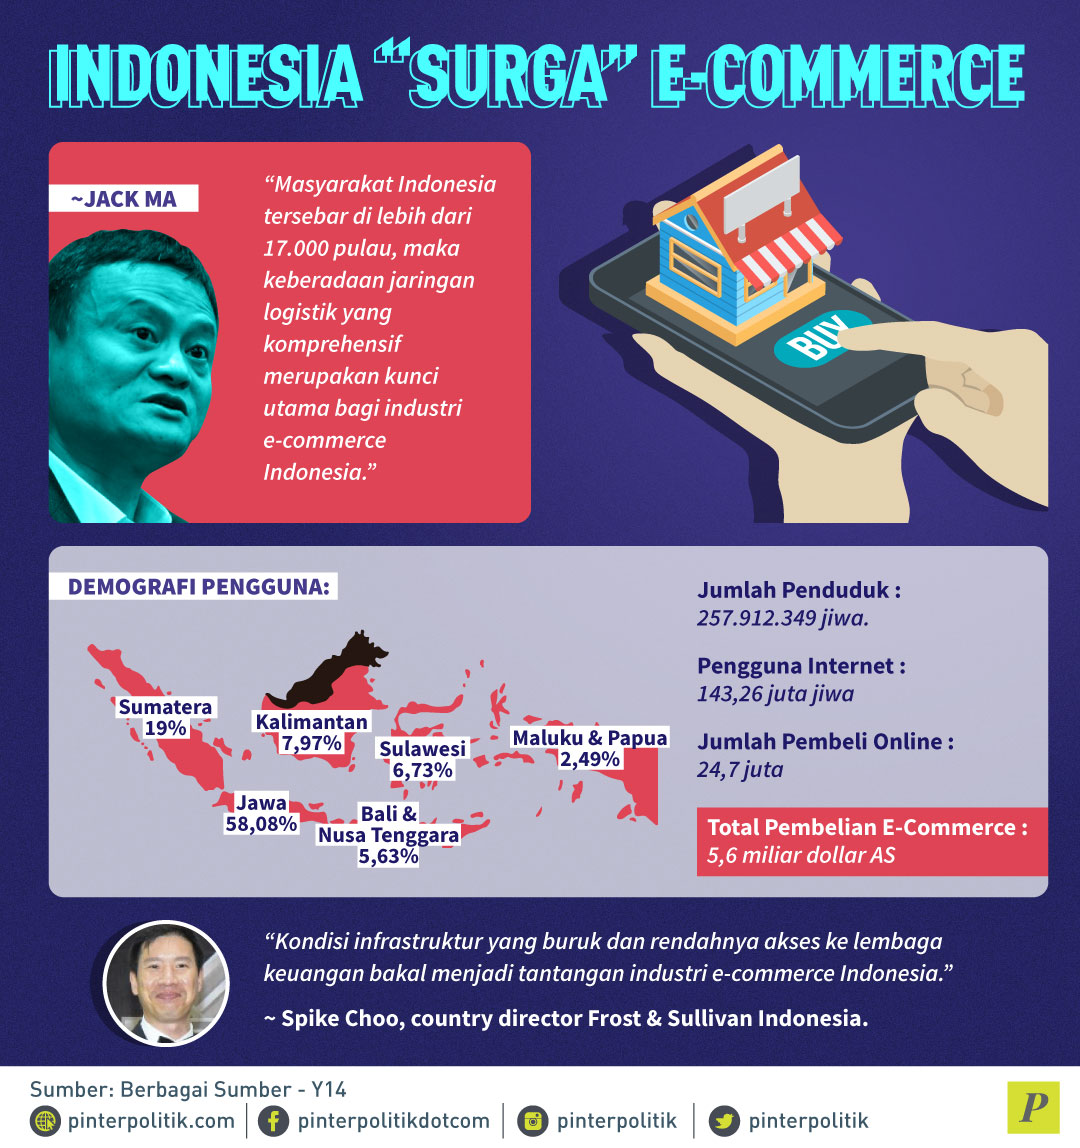 Indonesia "Surga" E-Commerce